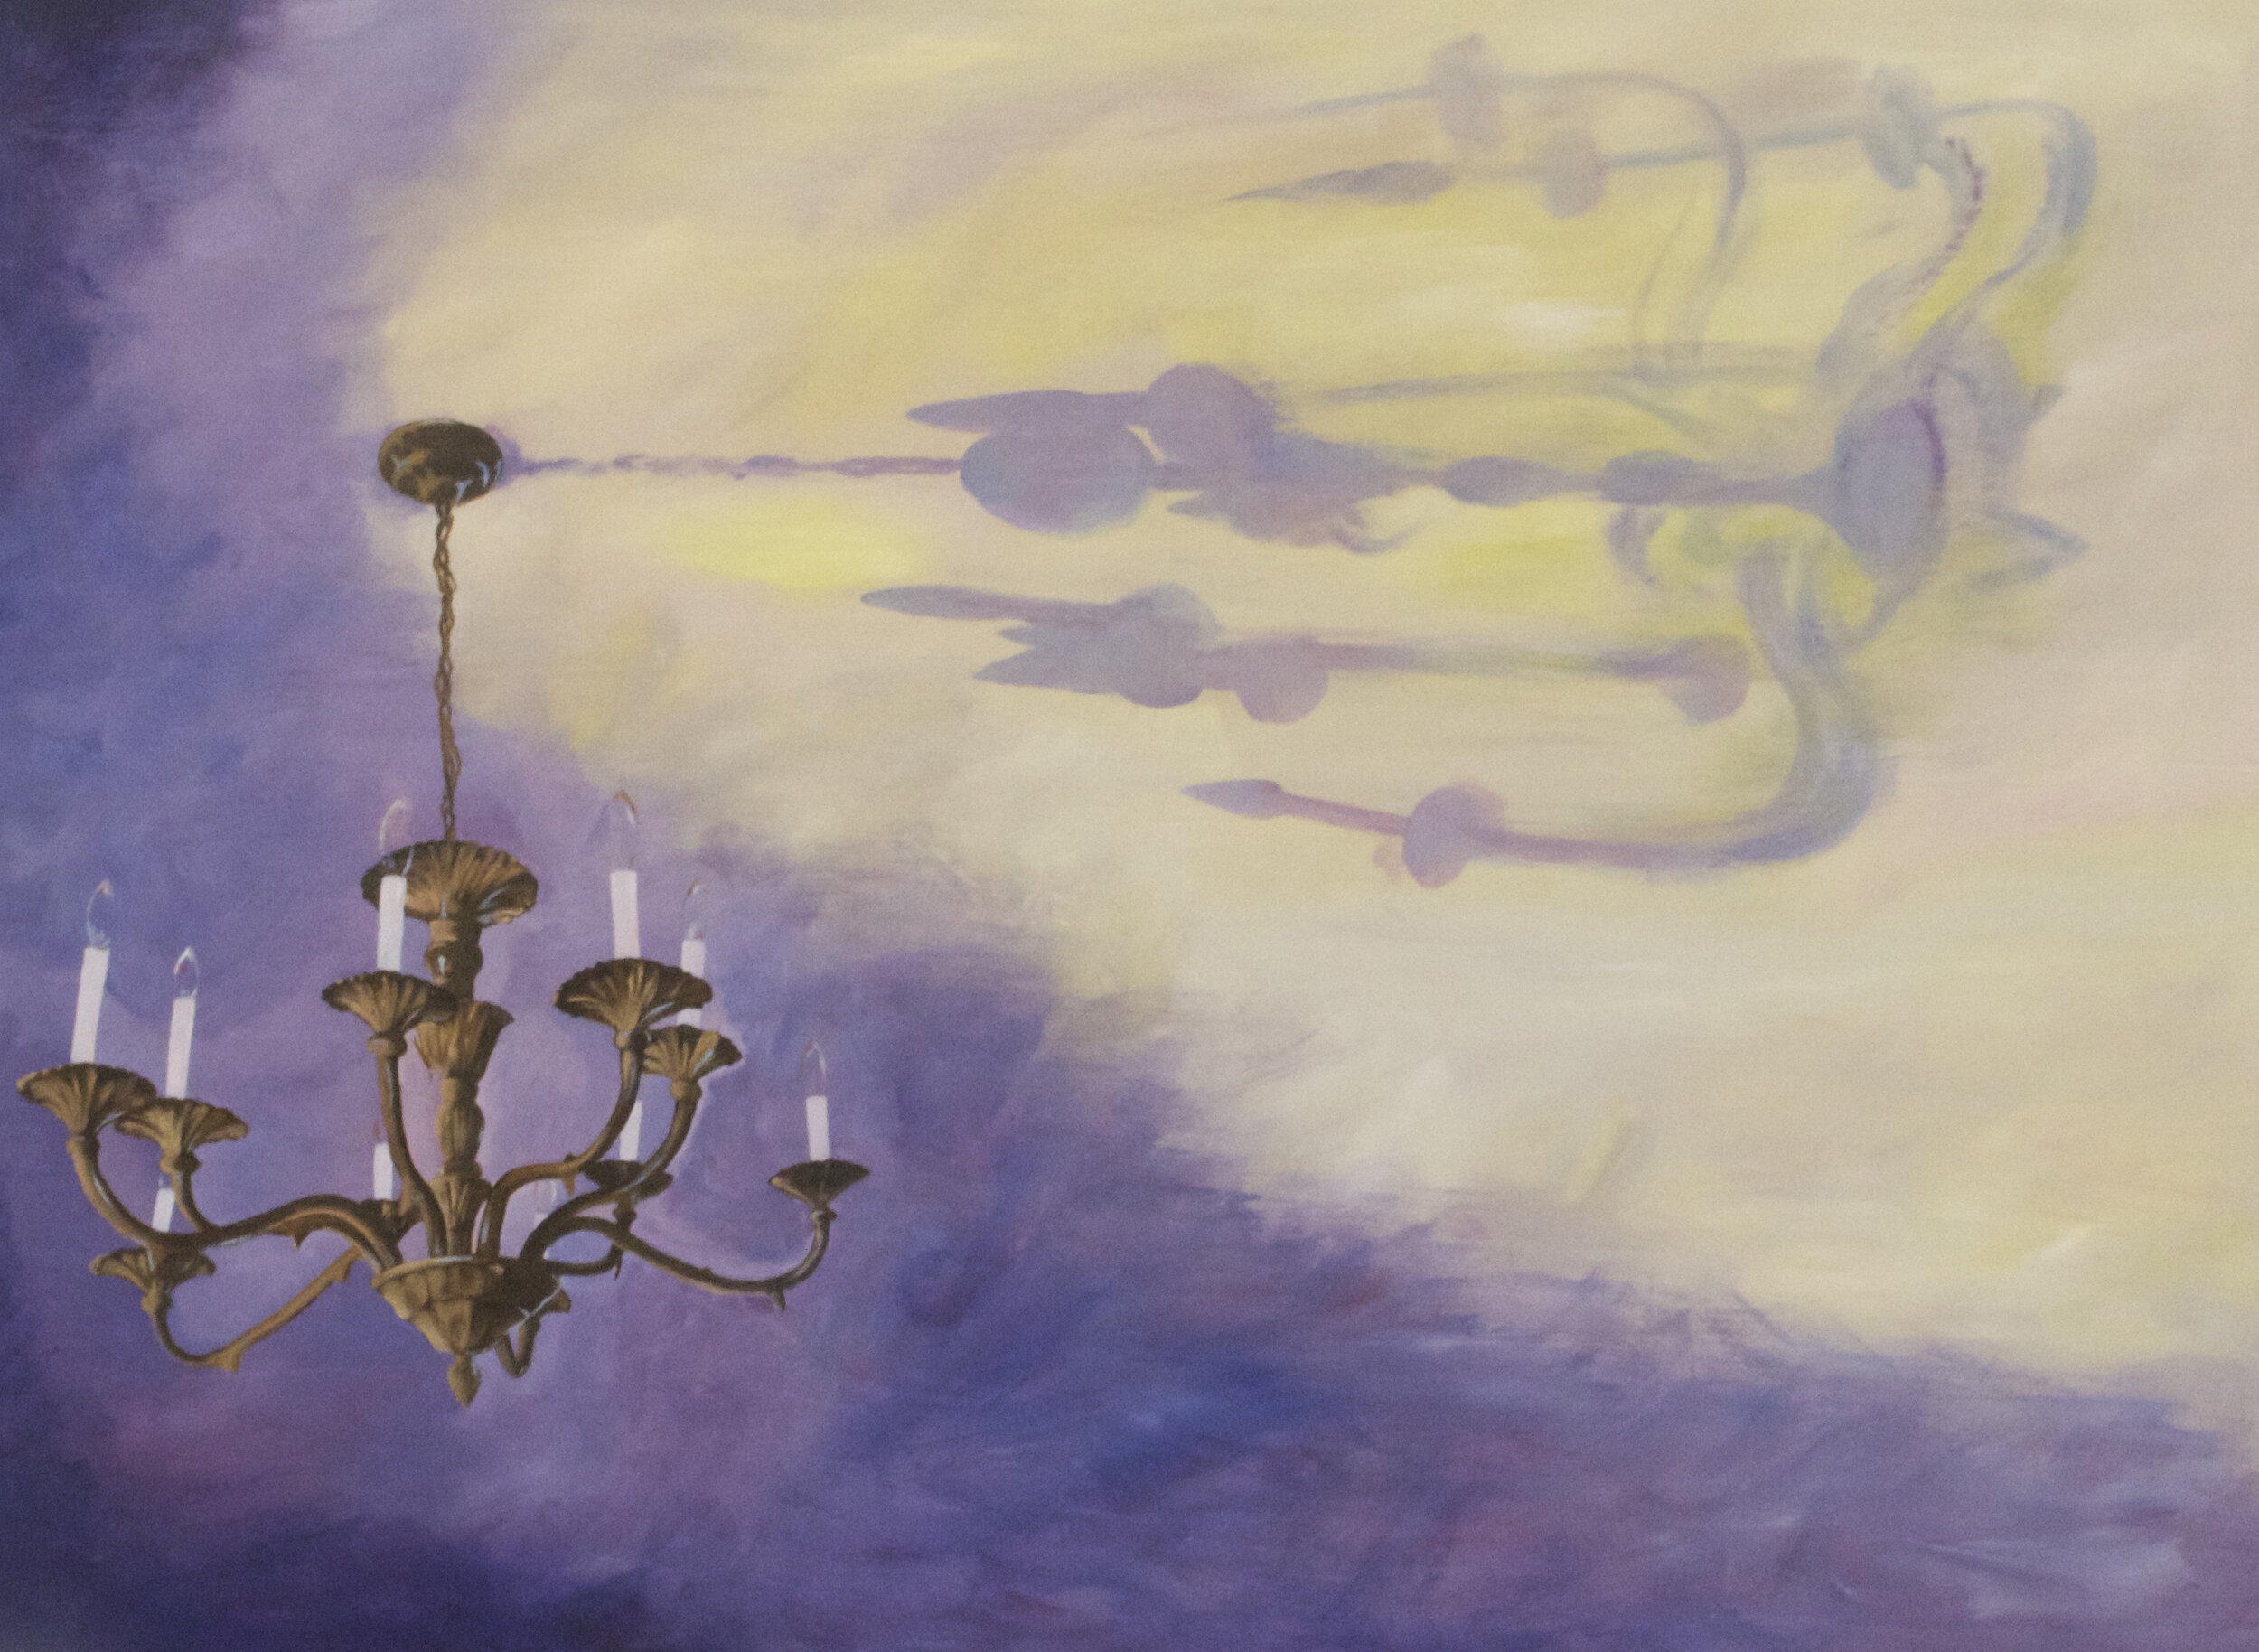   Chandelier , 2015  Oil on Panel, 36 x 48” 